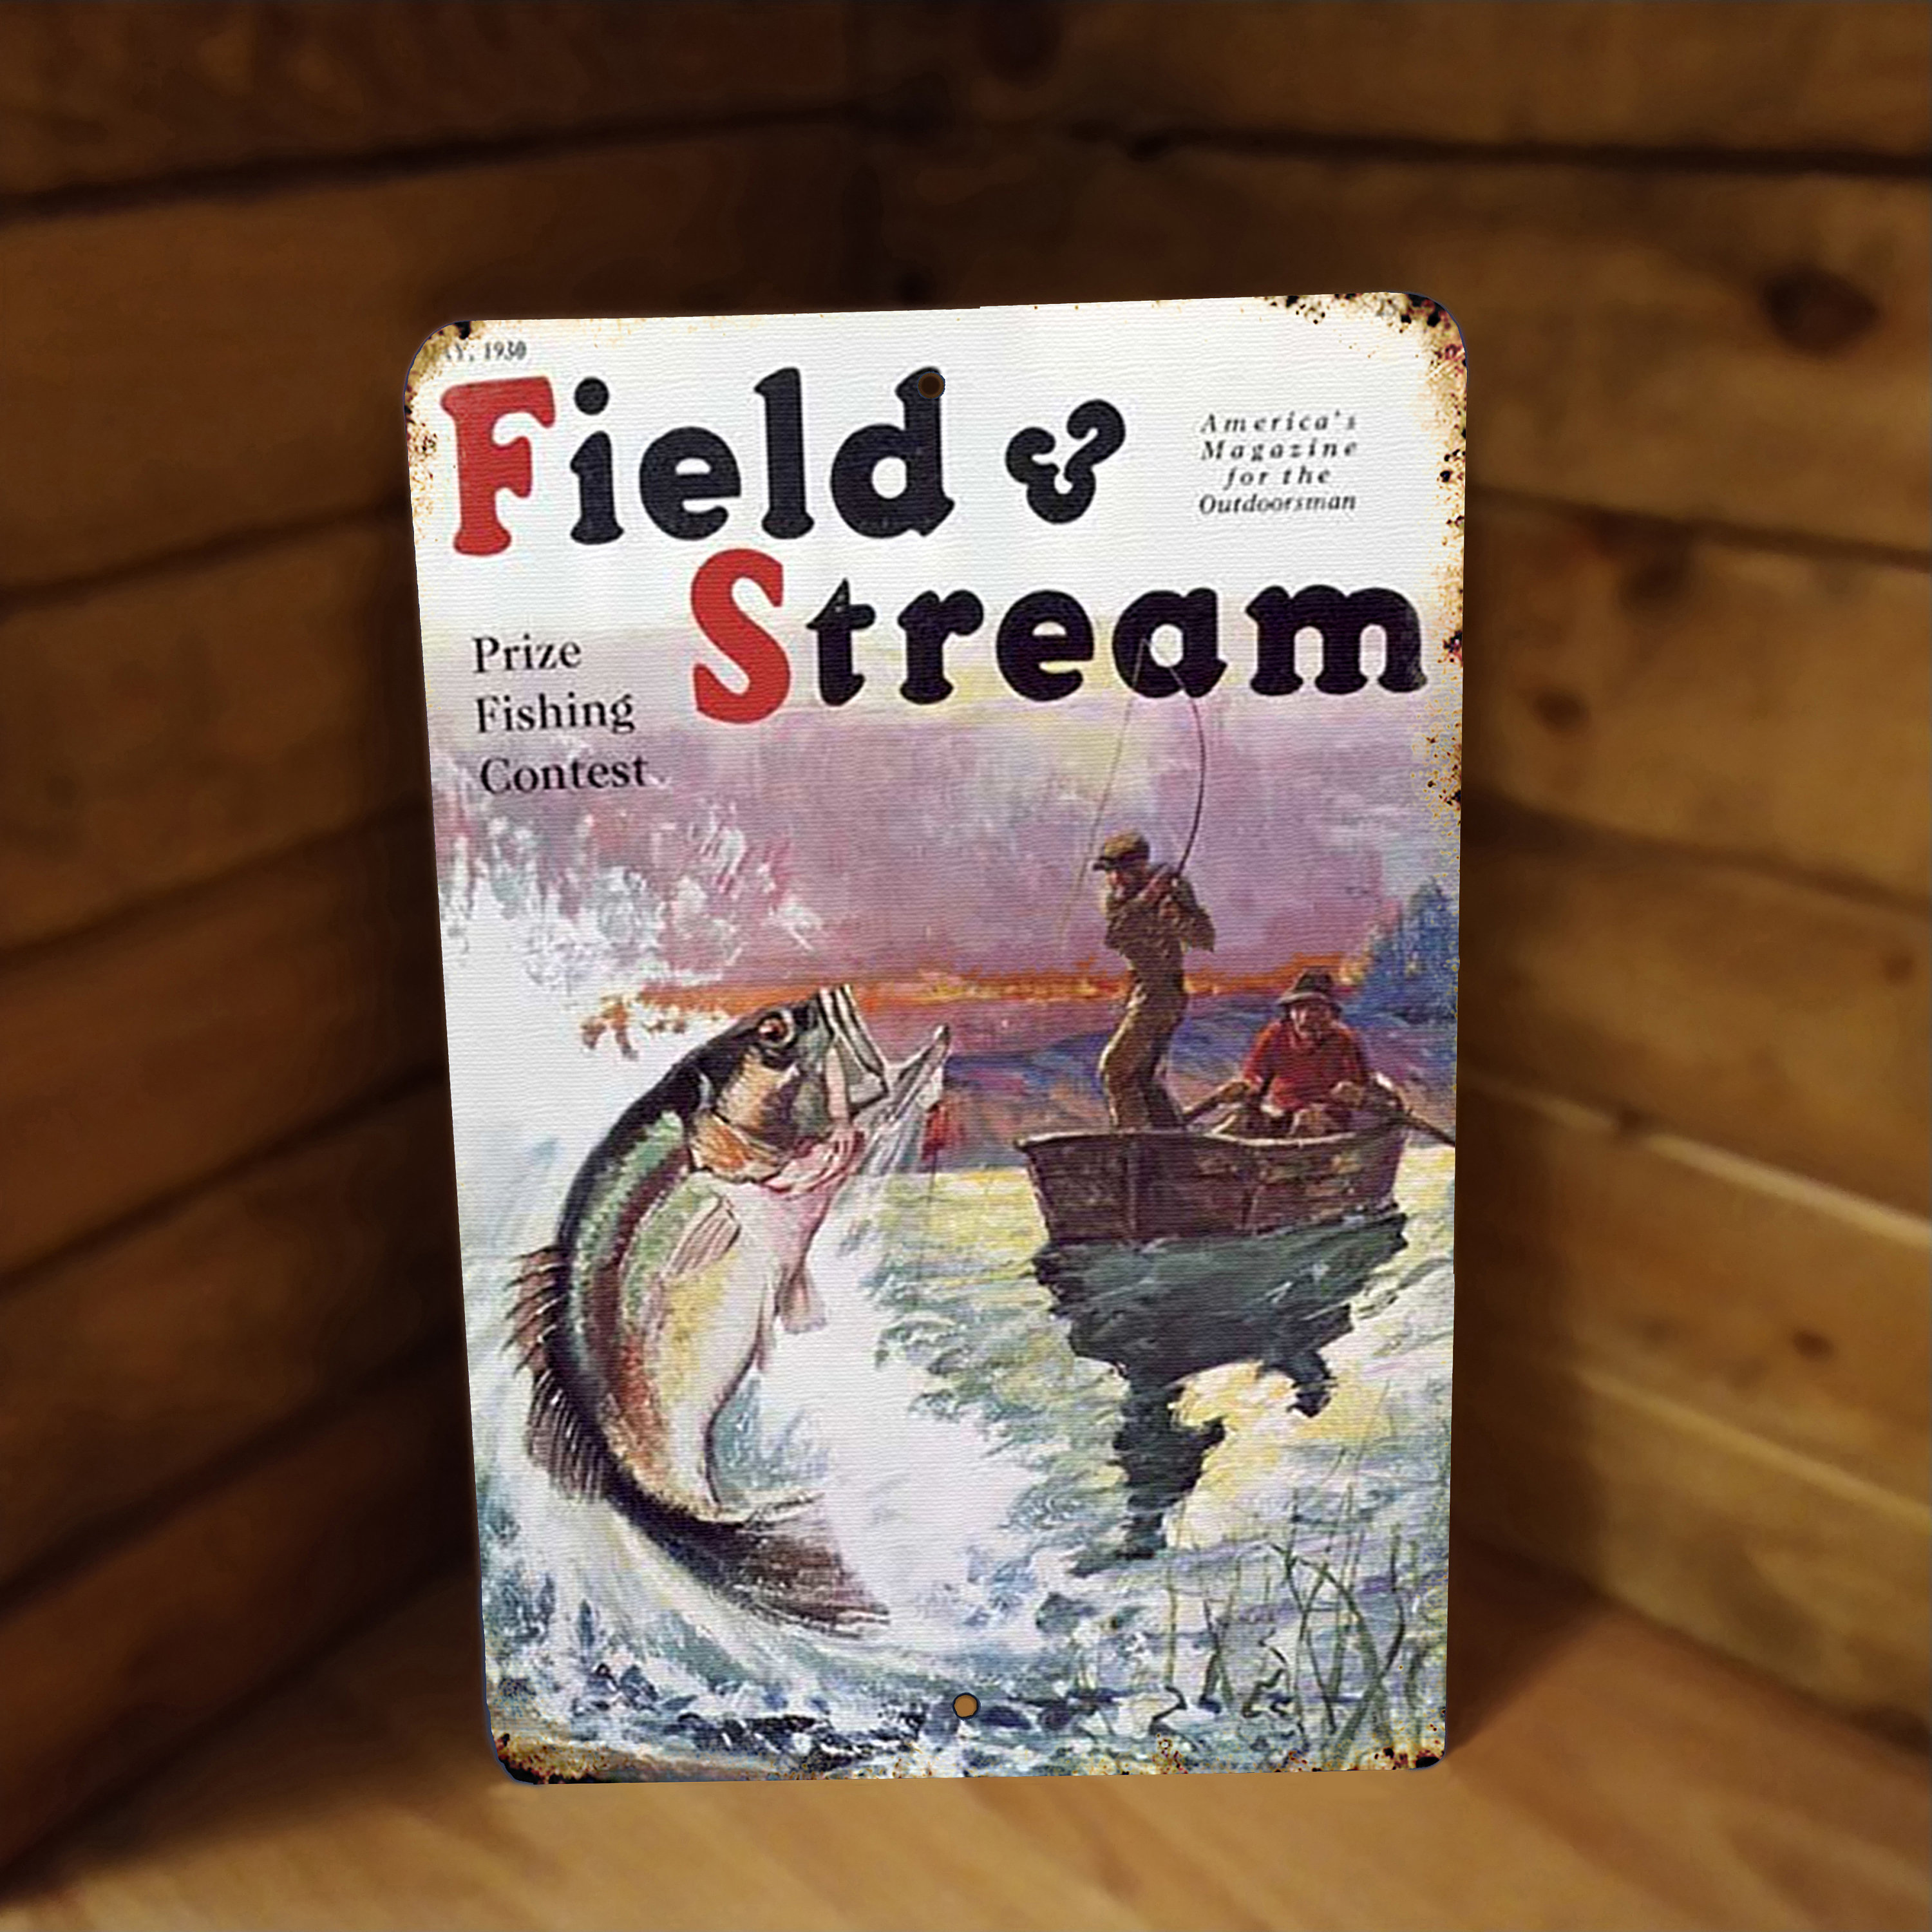 Wall Hanger 1930 Bass Fishing Art Field and Stream Magazine Cover (NEW)